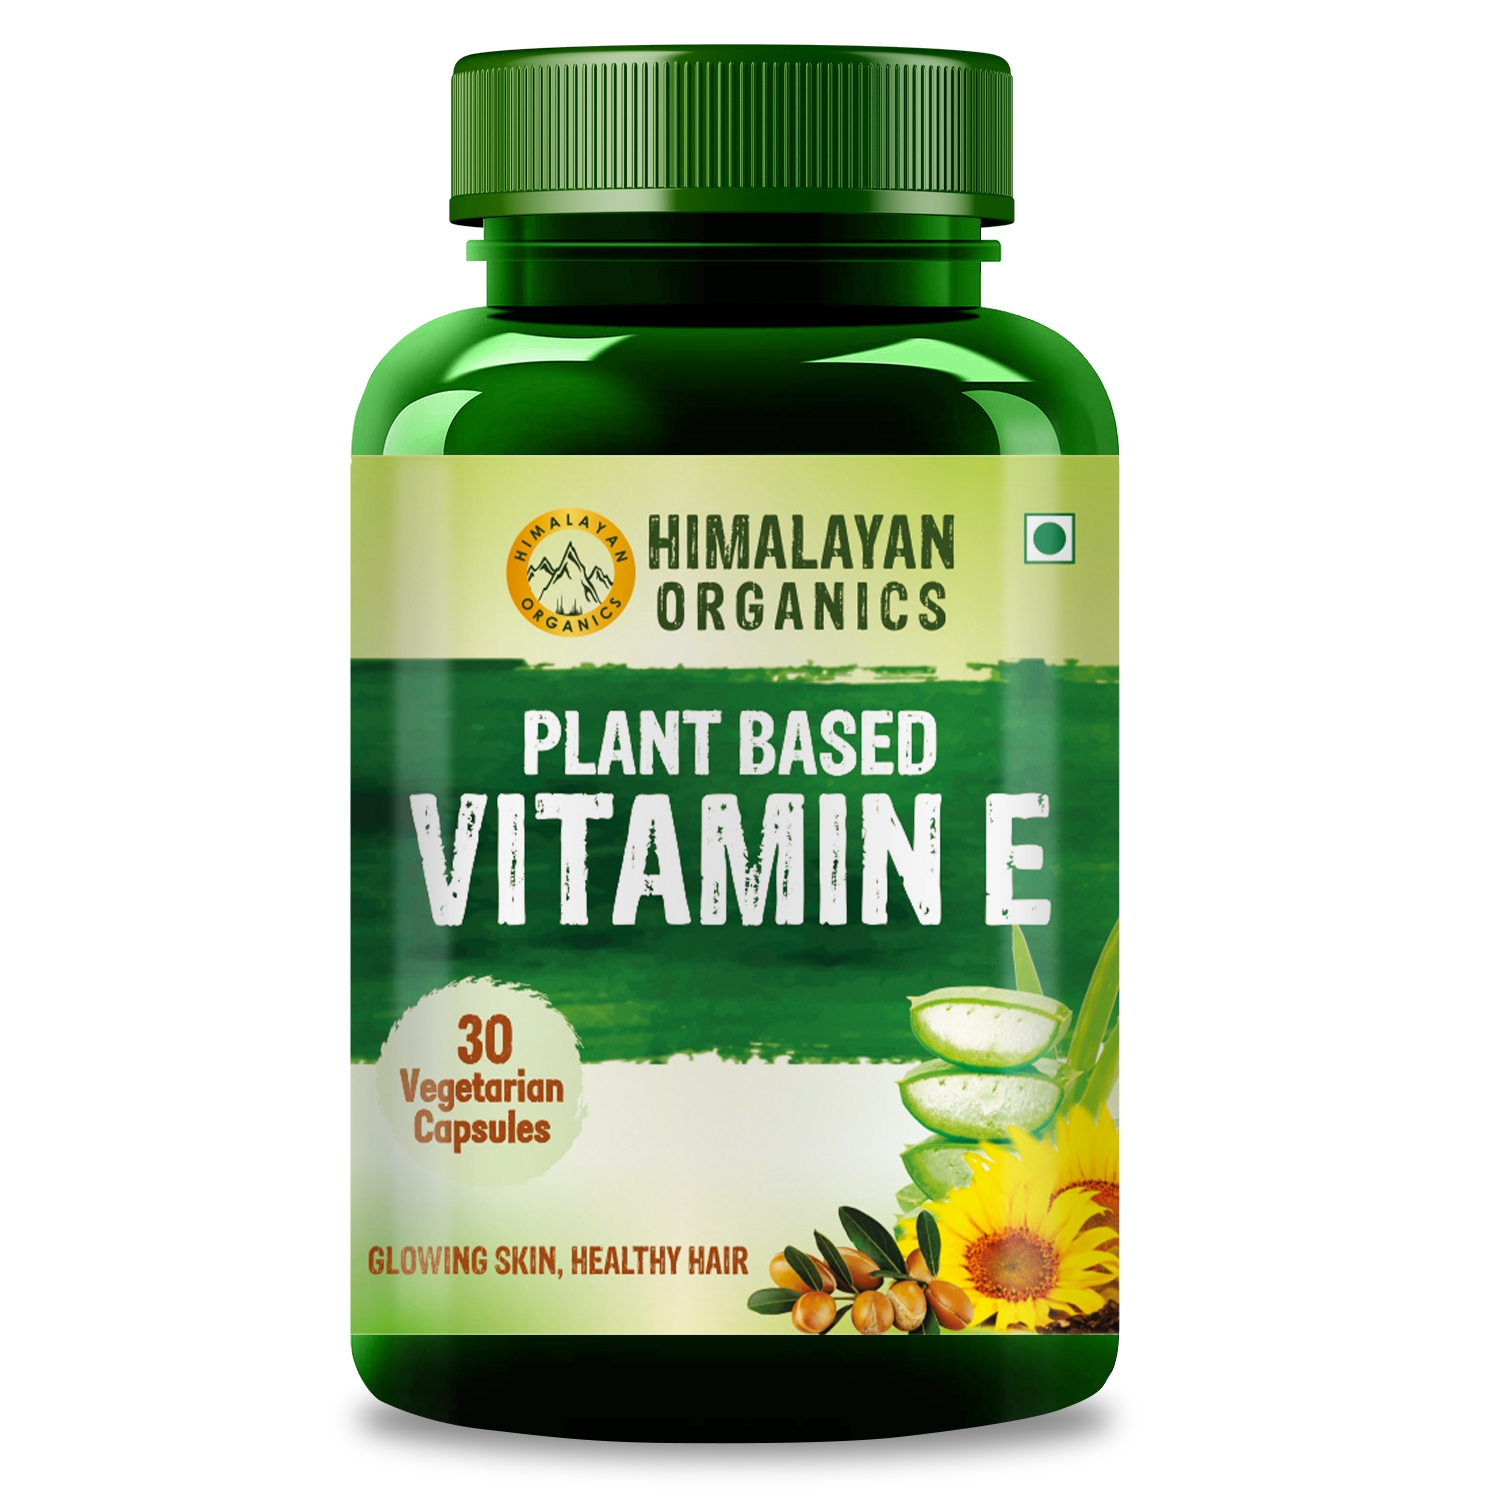 Himalayan Organics | Himalayan Organics Plant Based Vitamin E Capsules (Non-GMO Sunflower Oil, Aloevera Oil, Argan Oil) - 30 Capsules 0